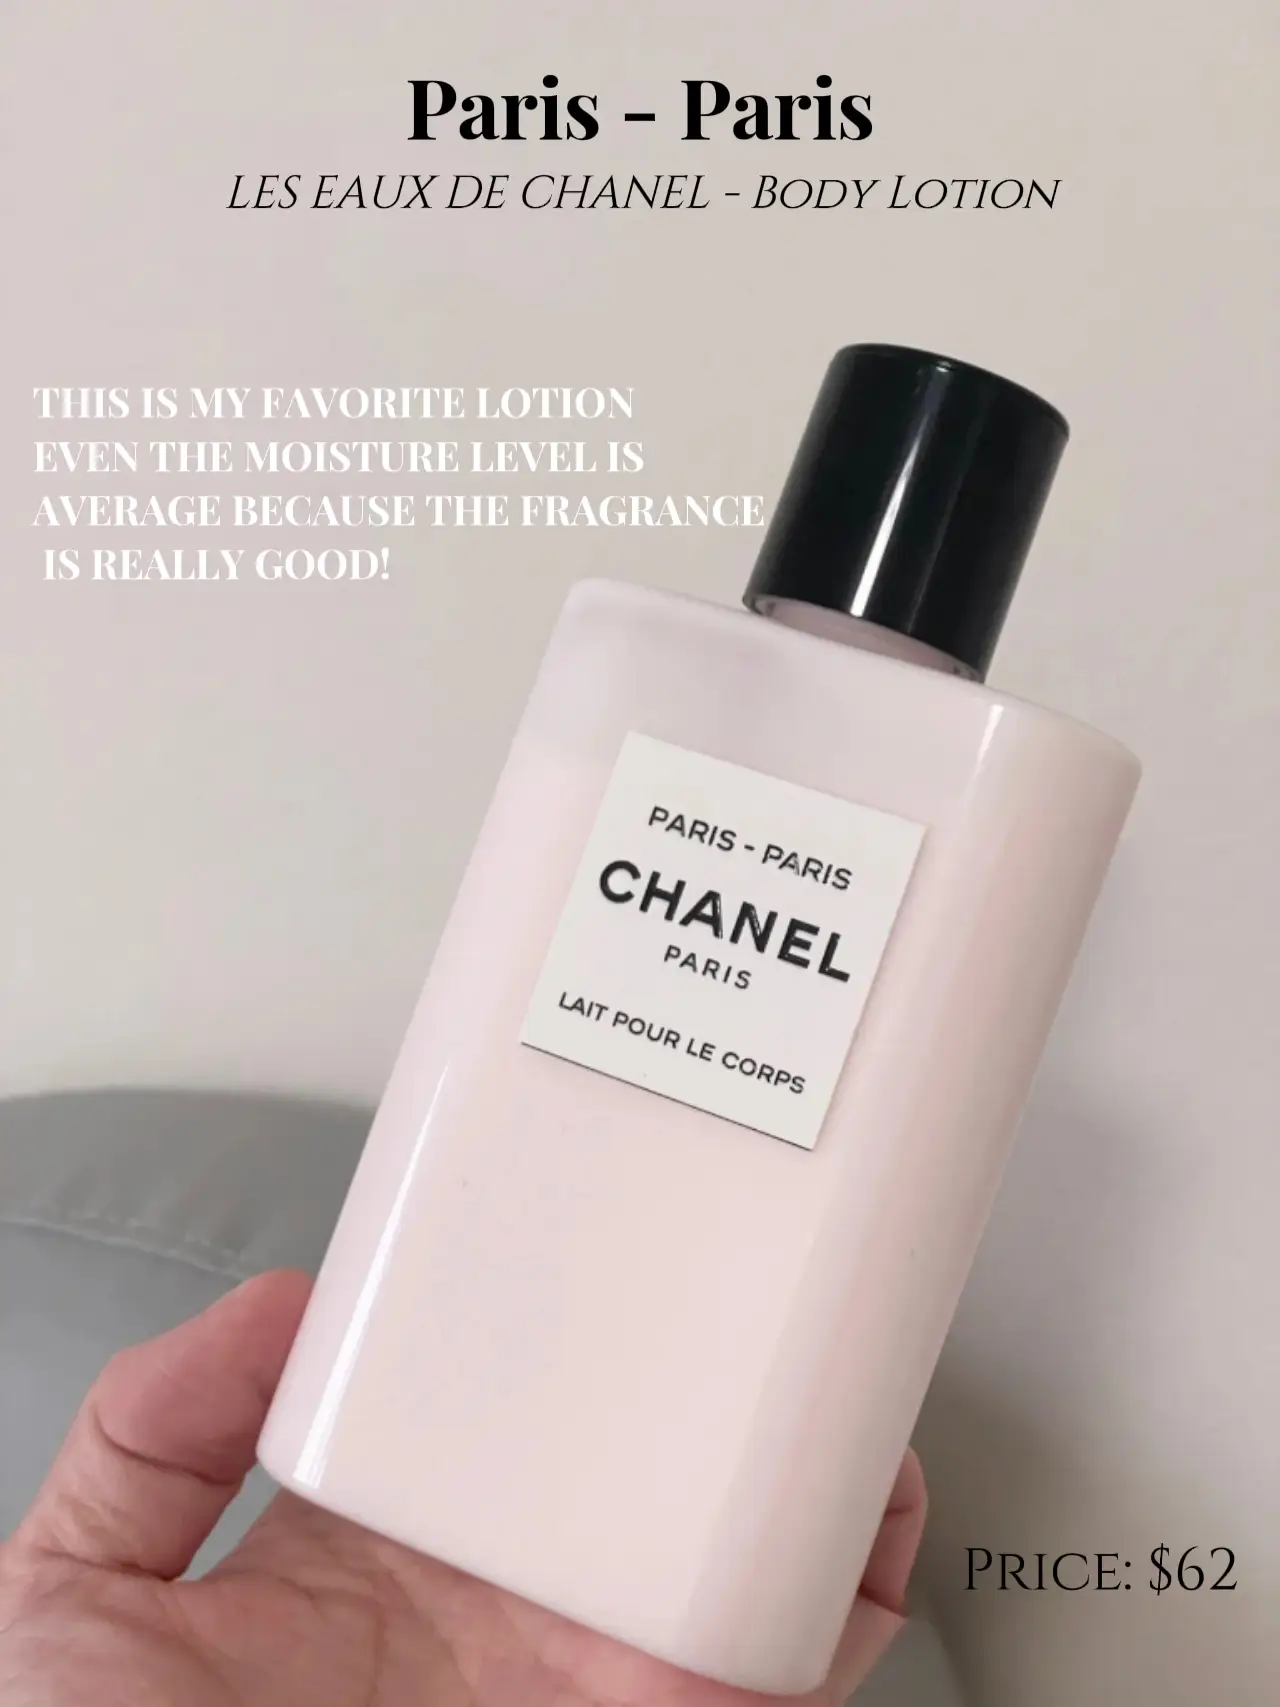 Chanel Paris Biarritz Lait Pour Le Corps Body Lotion – Be in the Pink